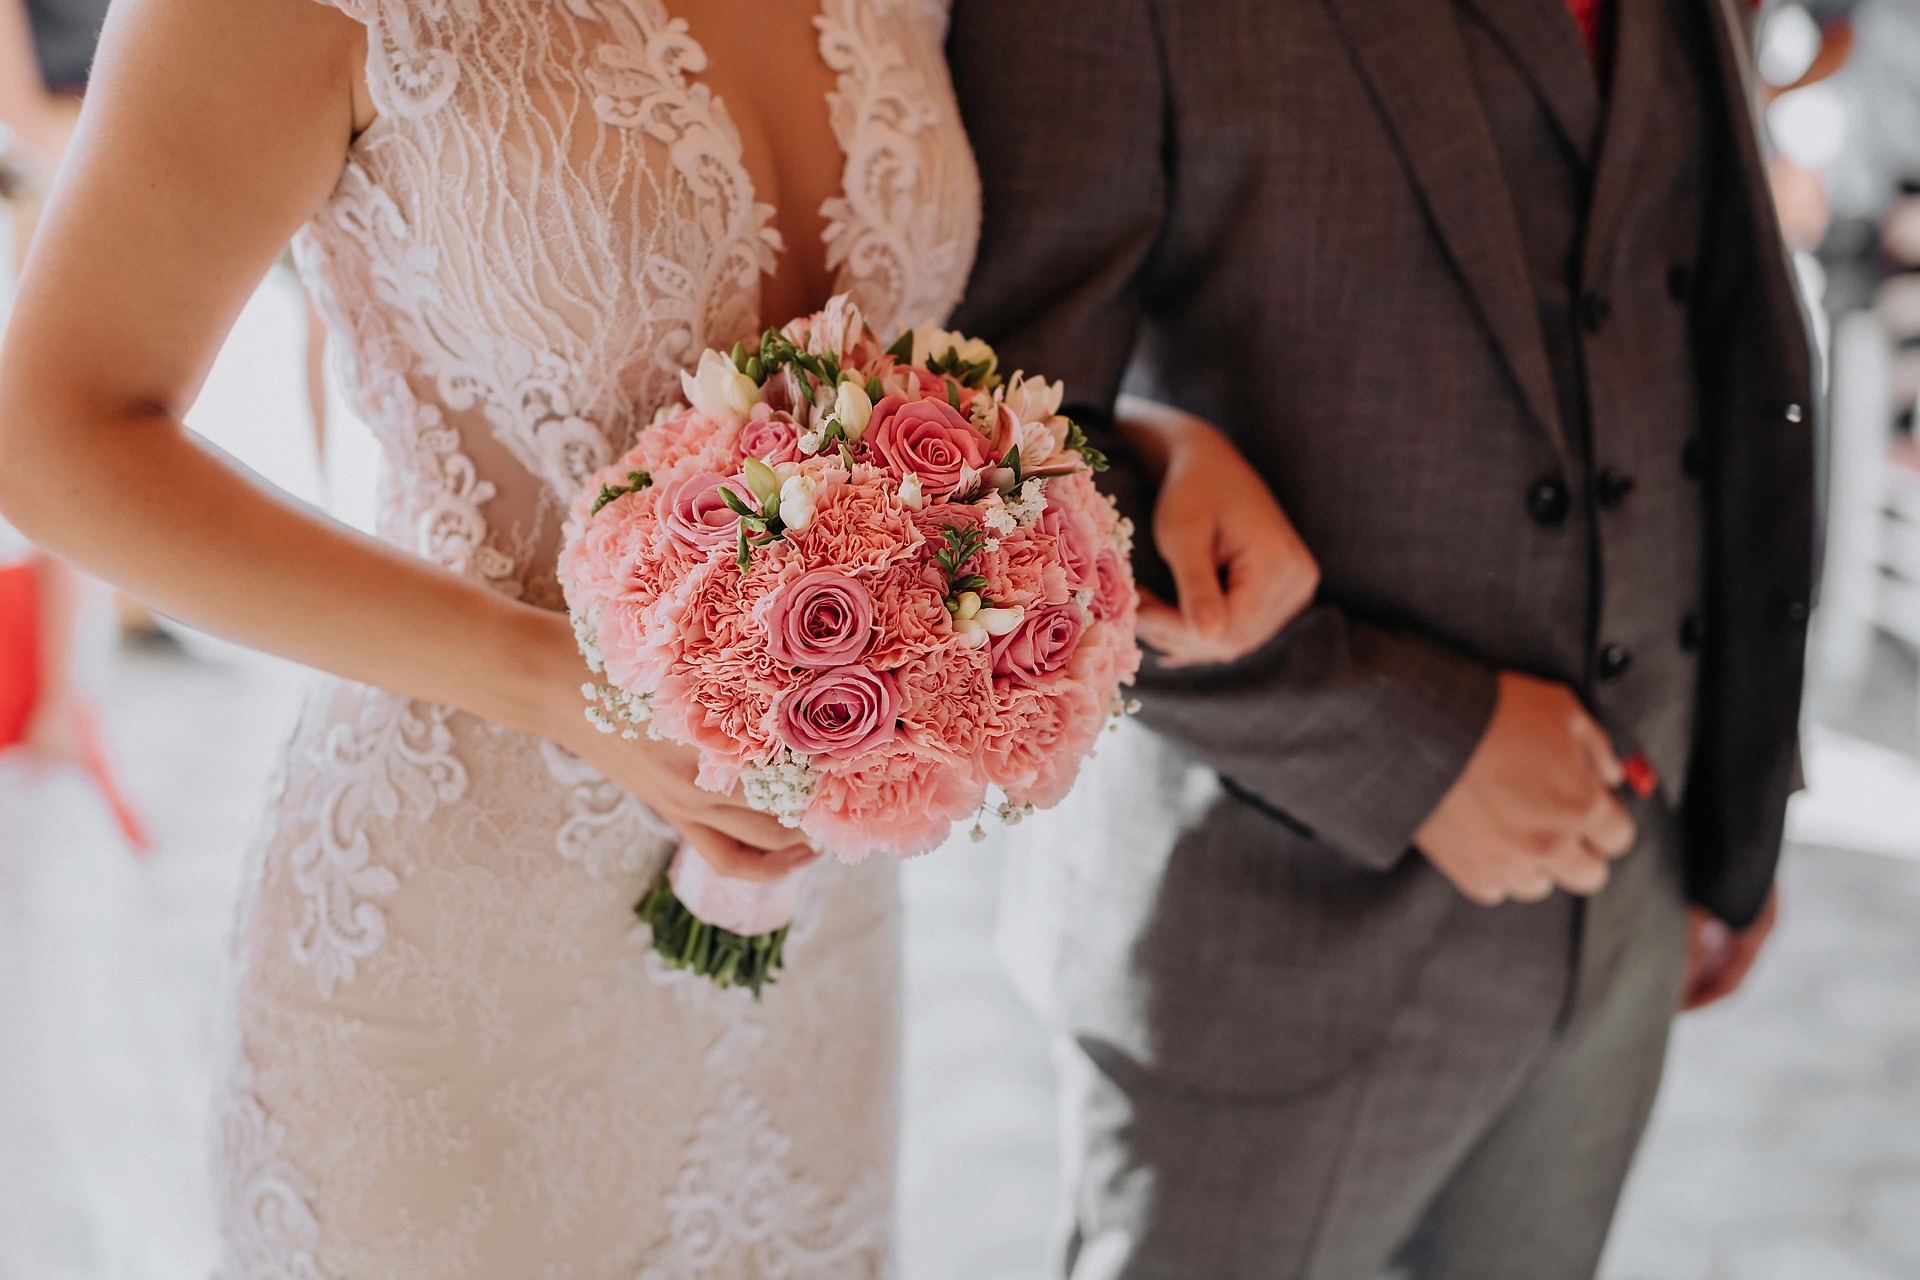 Rhode Island Marriage Licenses • New England Ceremonies